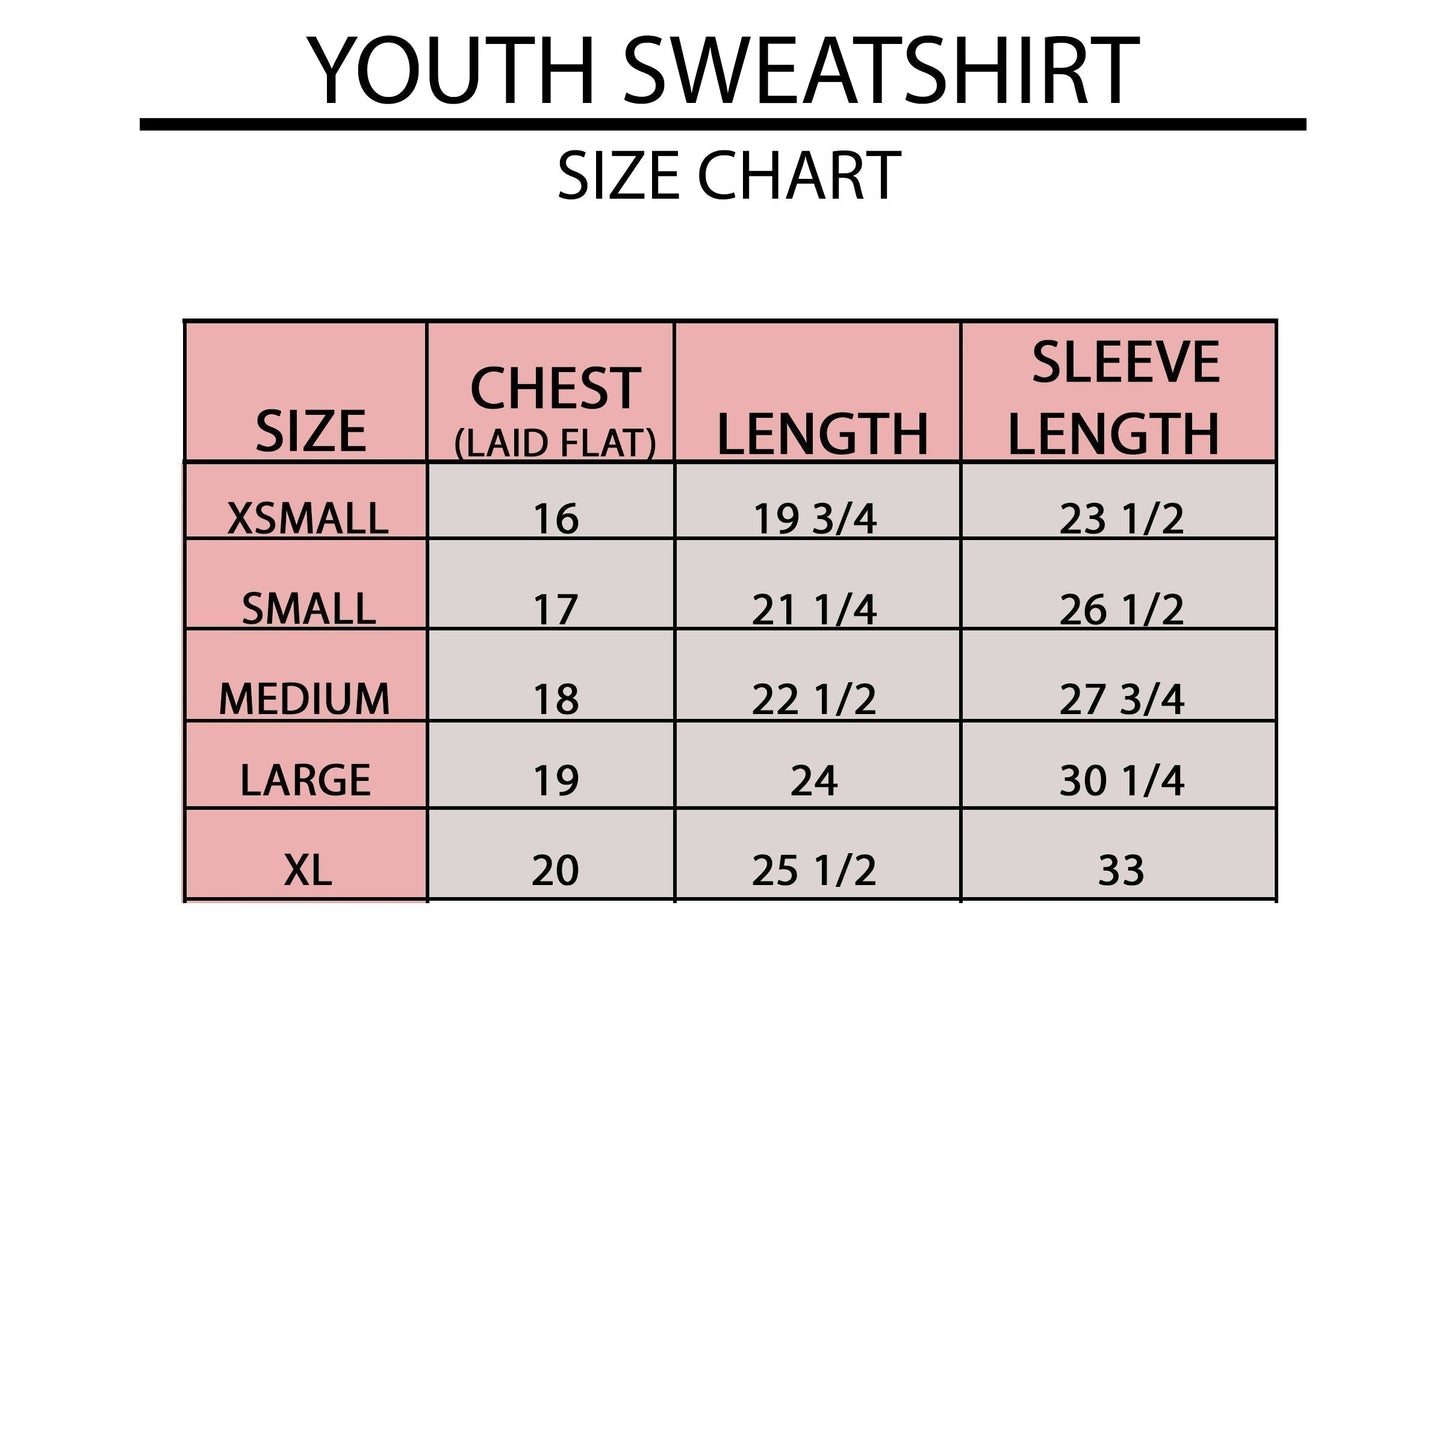 Cousin Crew Elf | Youth Sweatshirt